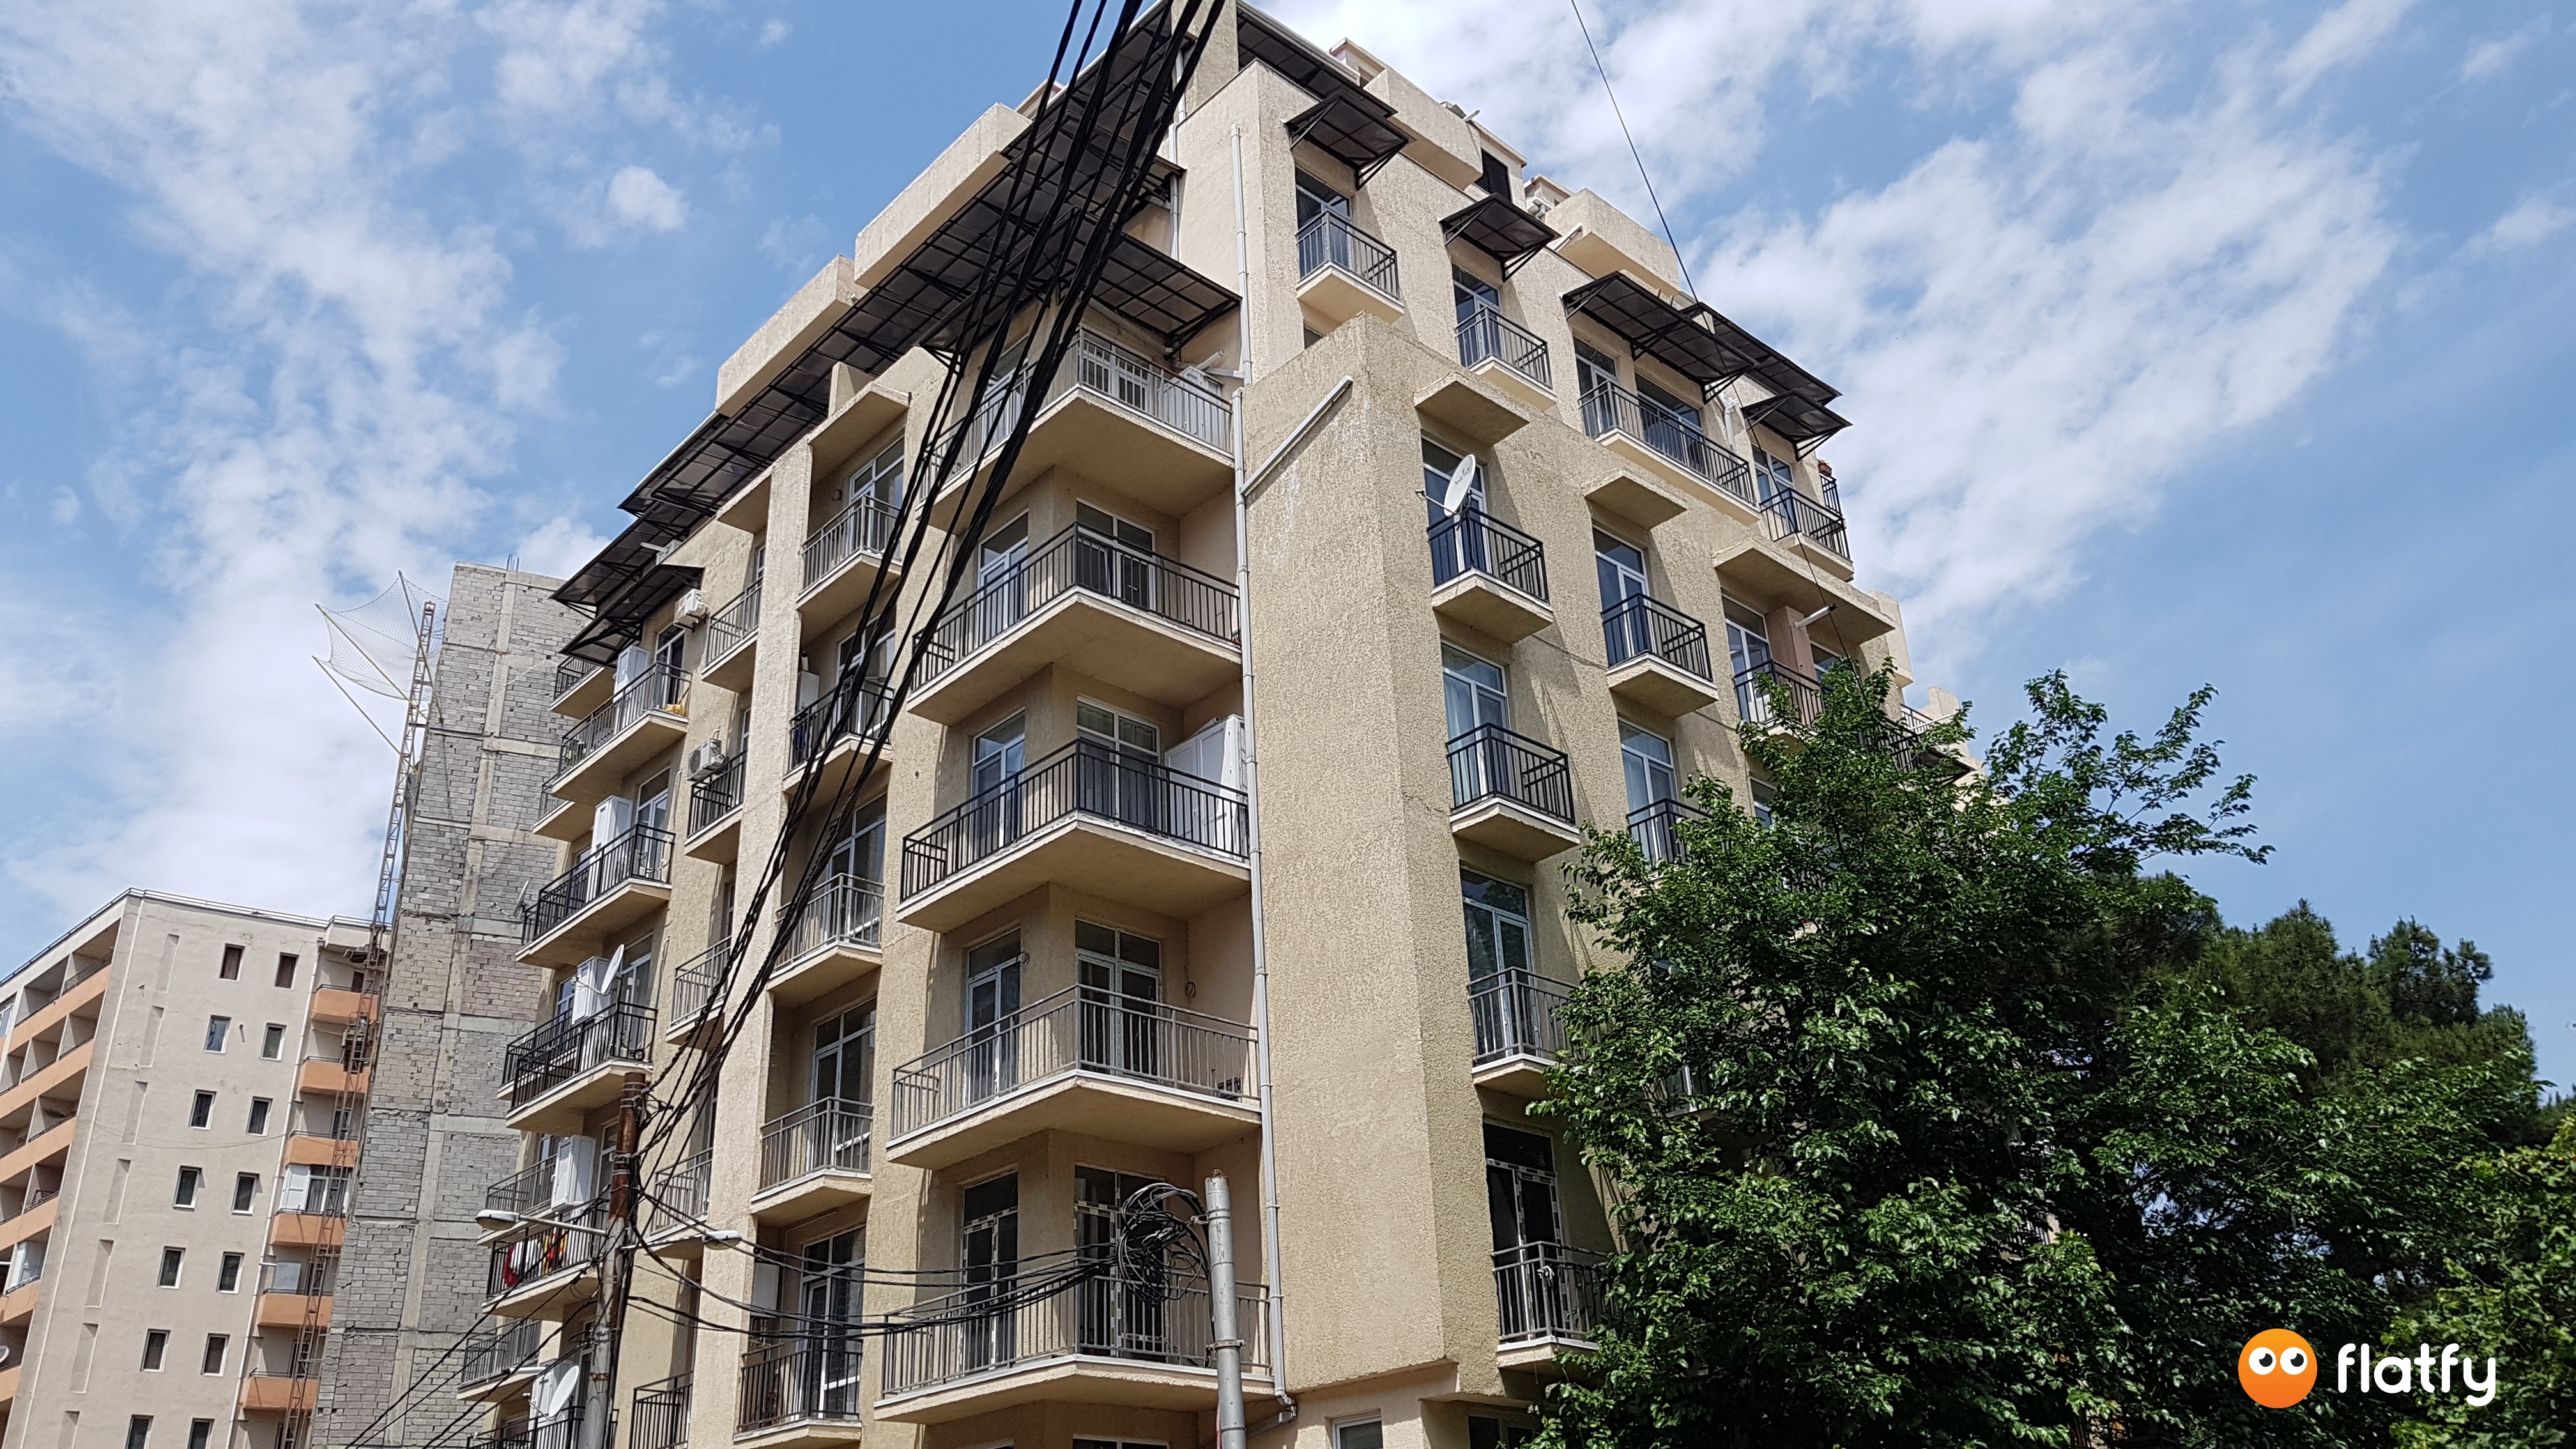 Construction progress Bau Star Varketili 2 - Angle 1, June 2019